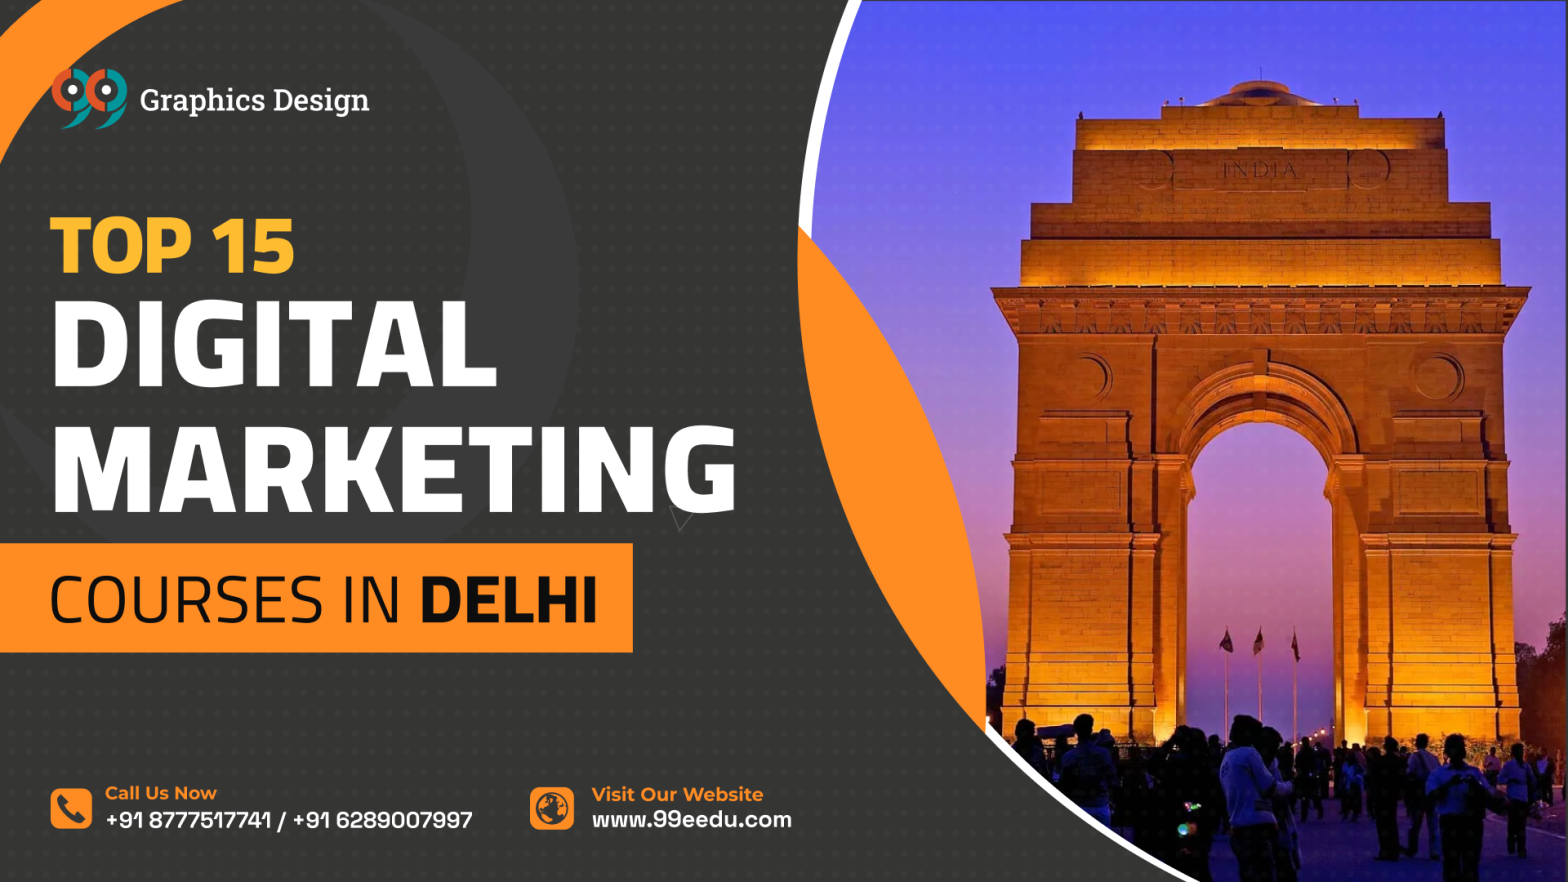 Digital marketing courses in Delhi